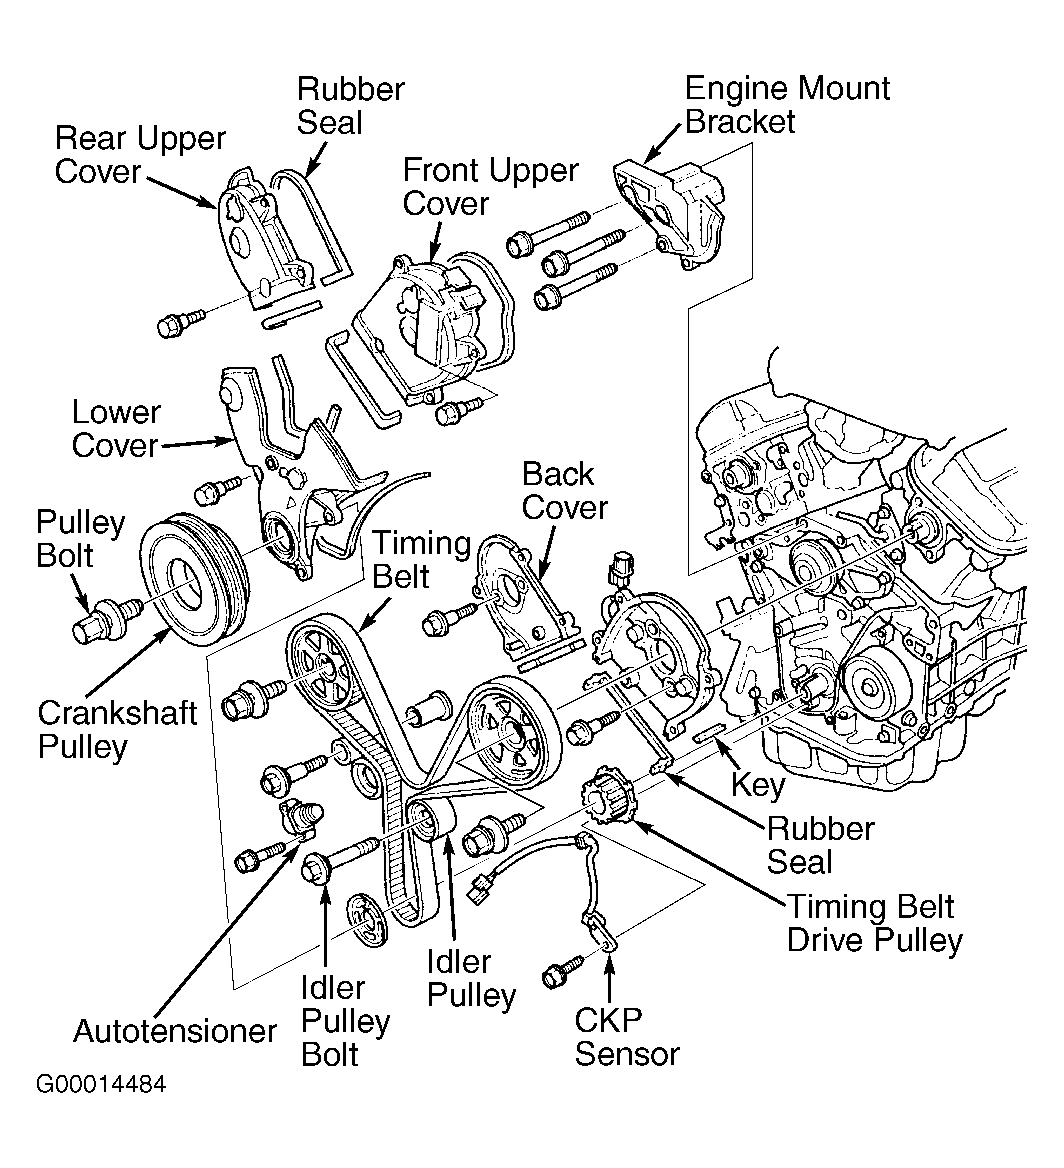 2005 Honda Accord Fuse Box Diagram Honda Accord Fuel System Diagram Wedocable Today Diagram Database